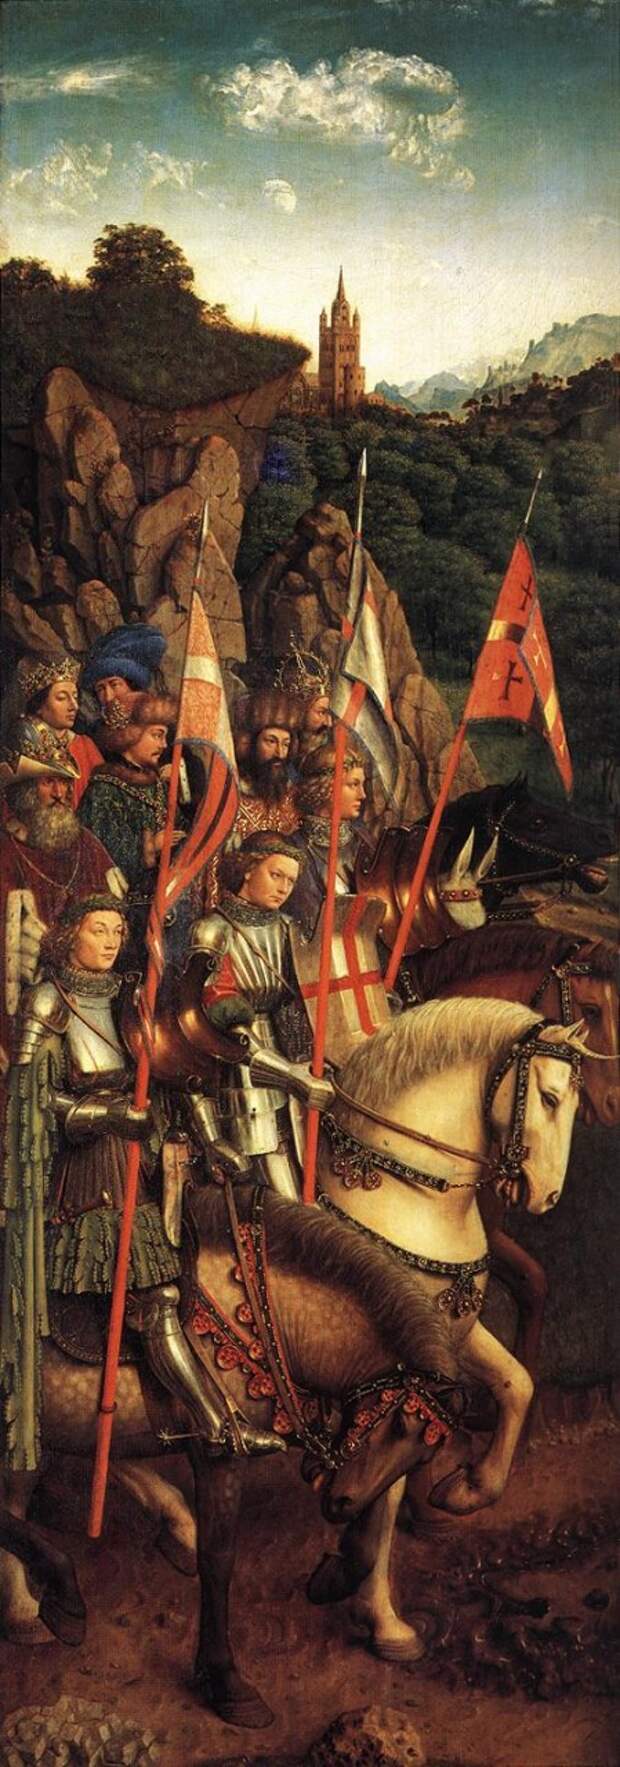 Ян ван Эйк - Eyck Jan van The Ghent Altarpiece The Soldiers of Christ